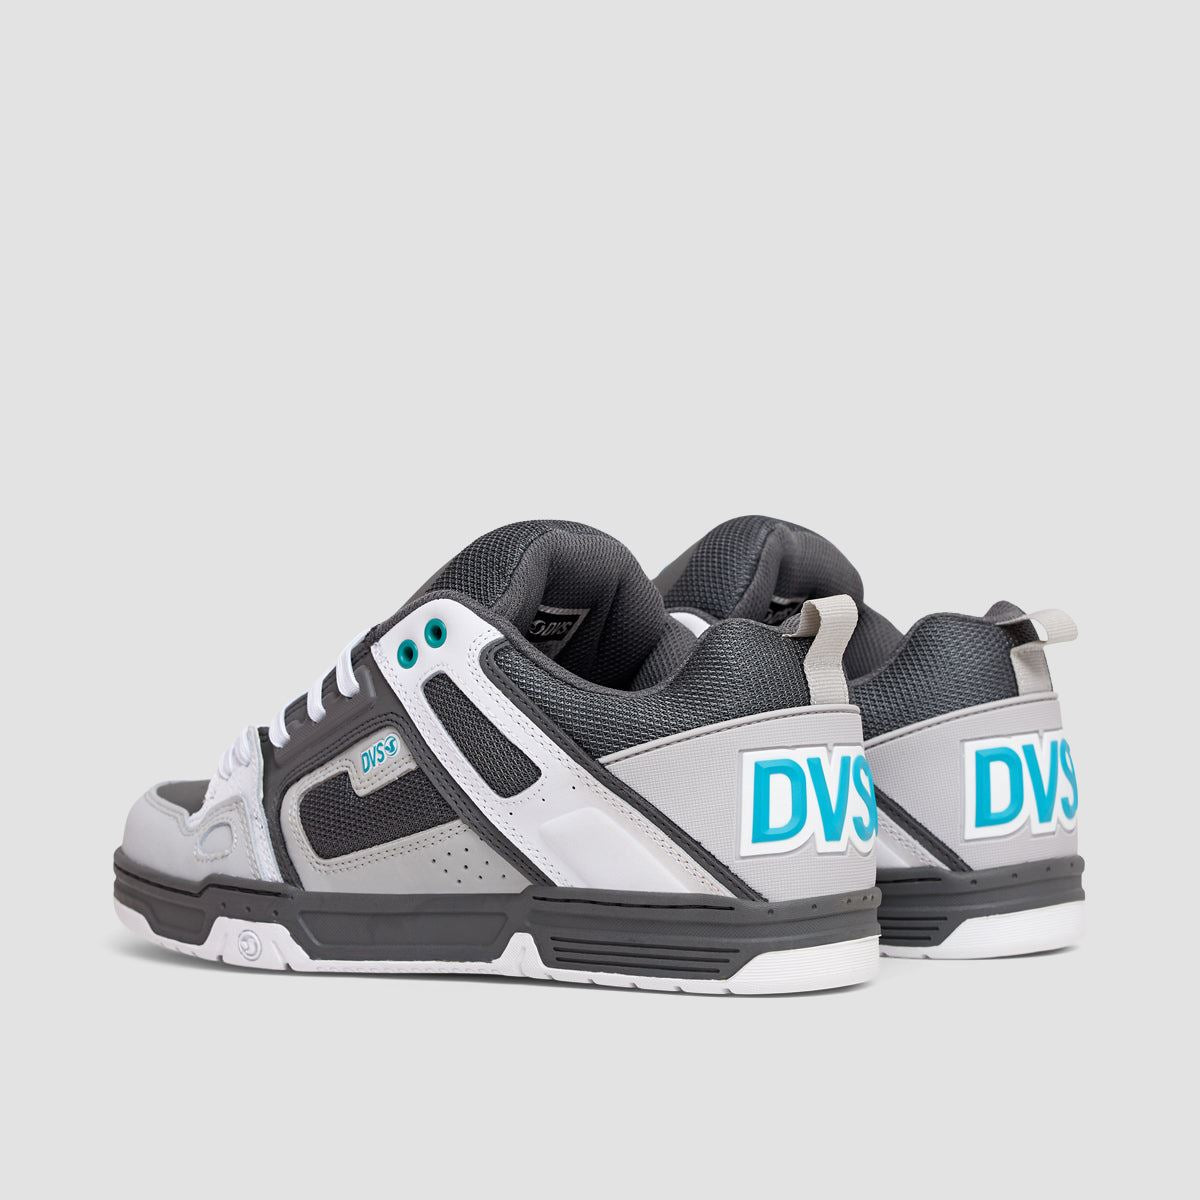 DVS Comanche Shoes - Charcoal/White/Turqoise Nubuck